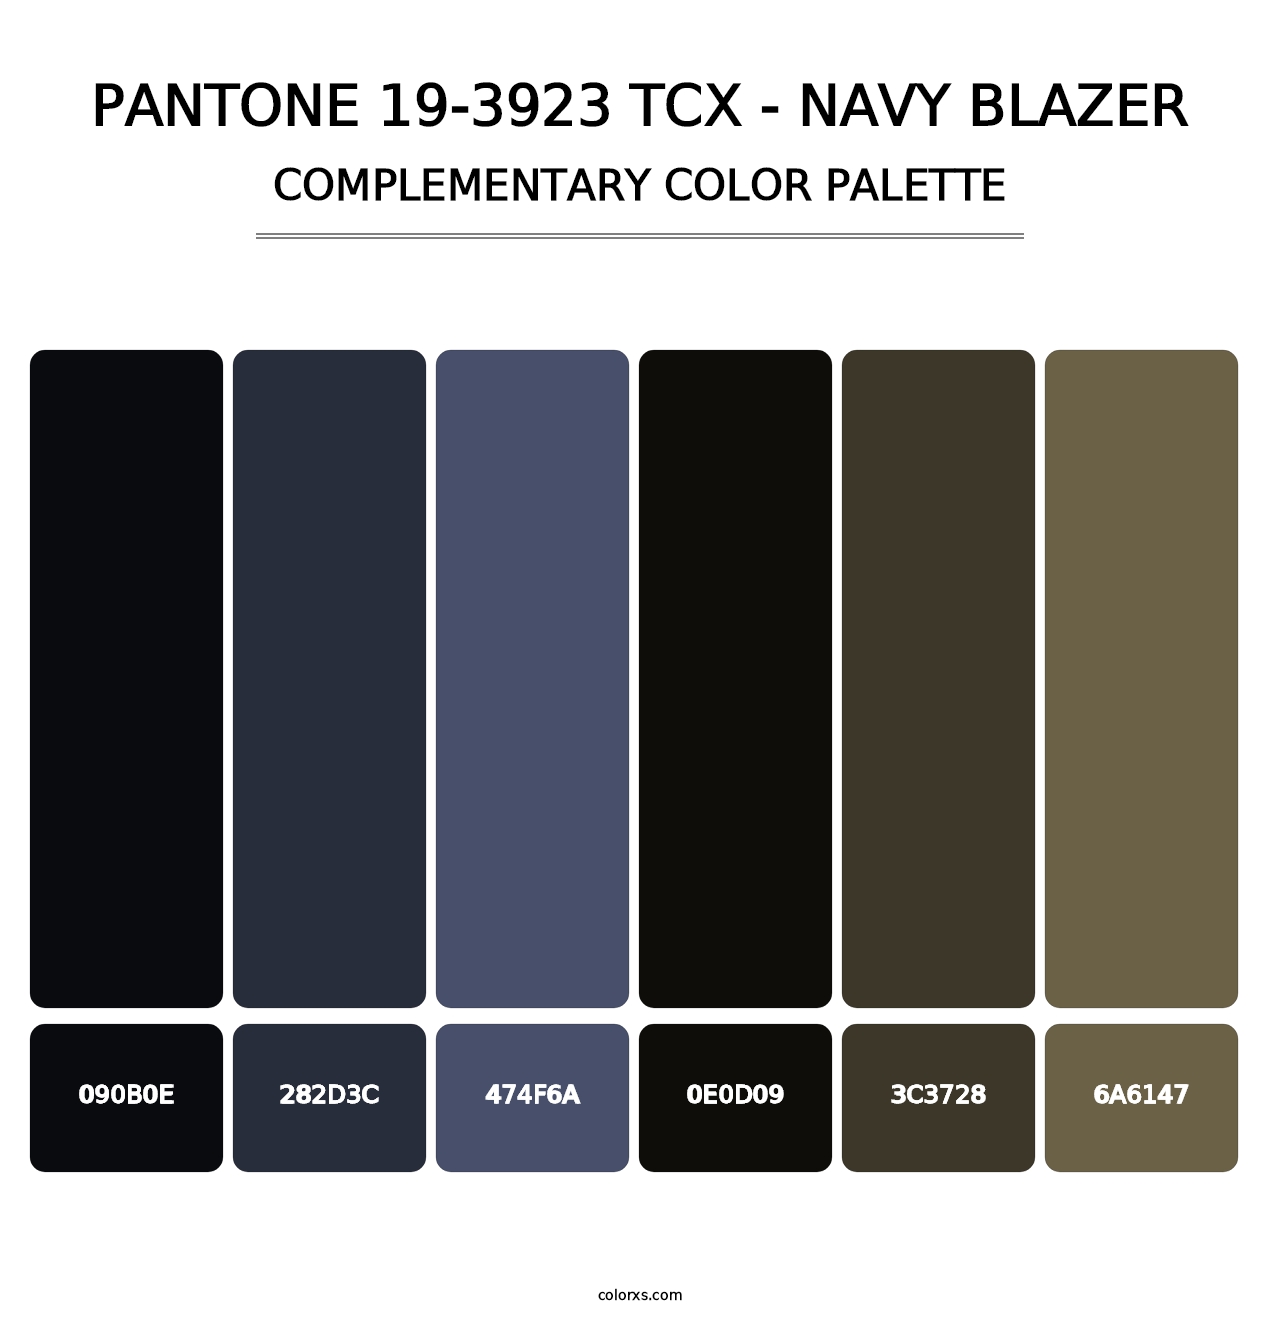 PANTONE 19-3923 TCX - Navy Blazer - Complementary Color Palette